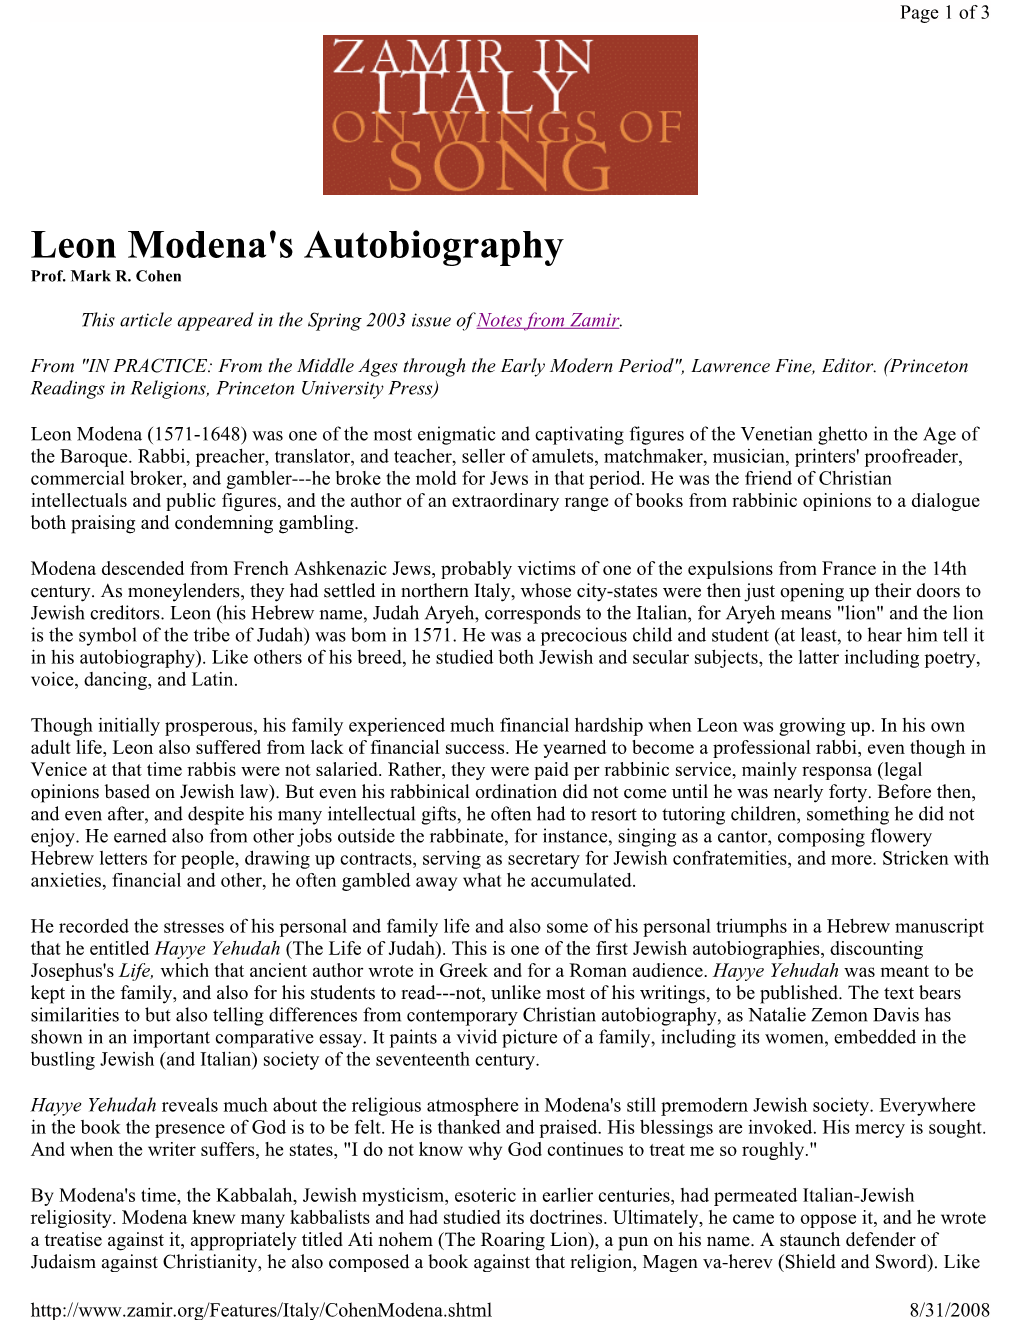 Leon Modena's Autobiography Prof